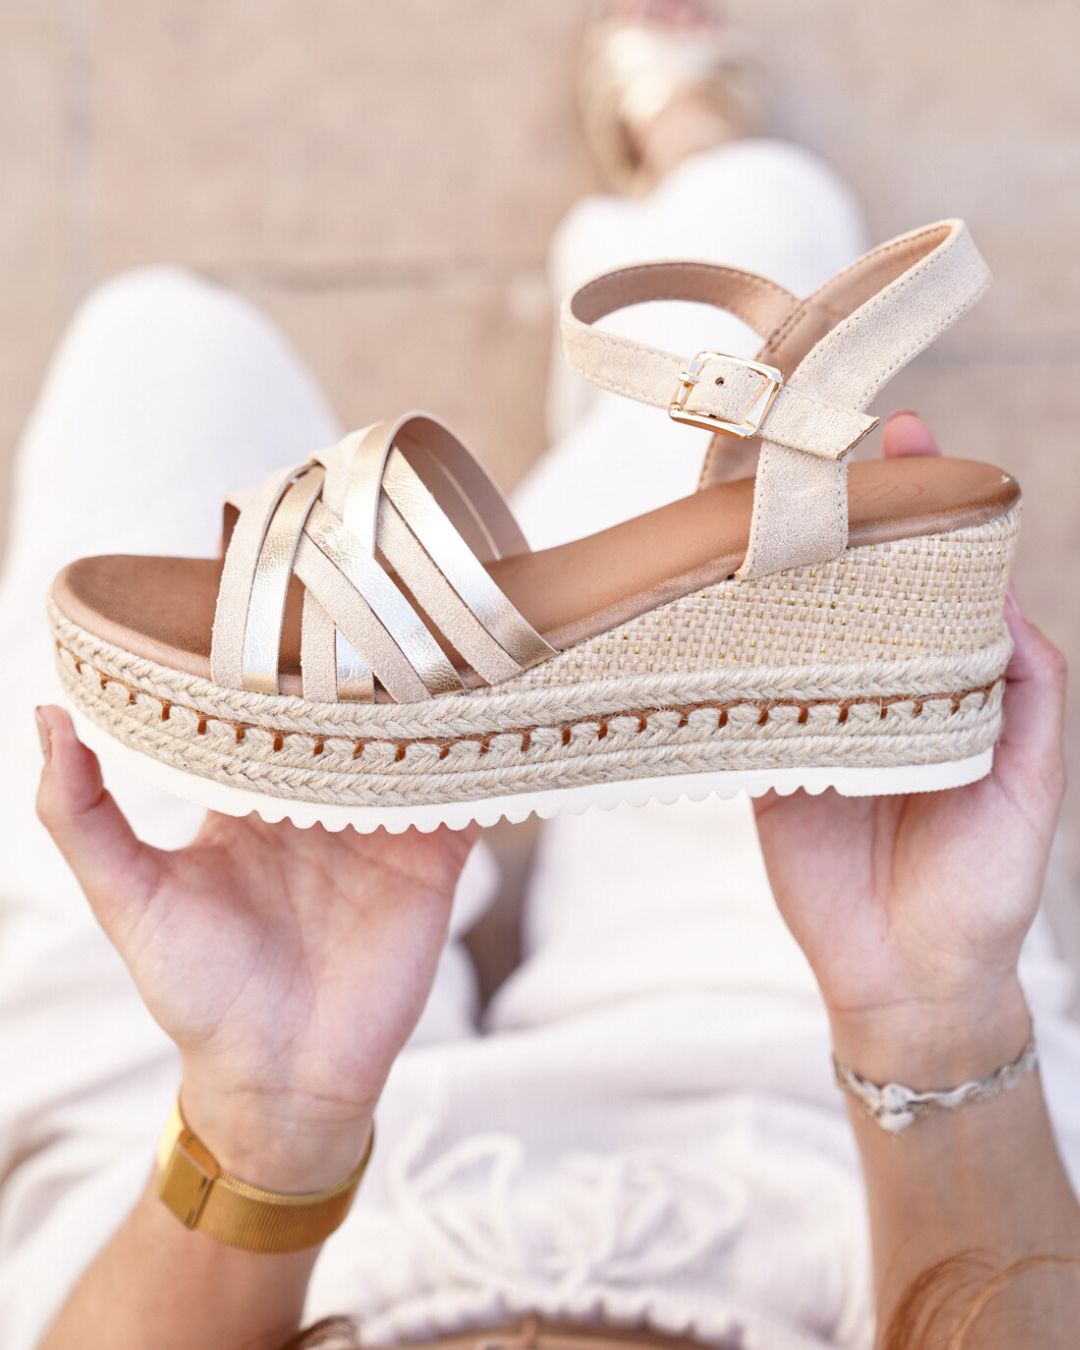 Sandale femme compensée confort beige - Alyson - Casualmode.fr